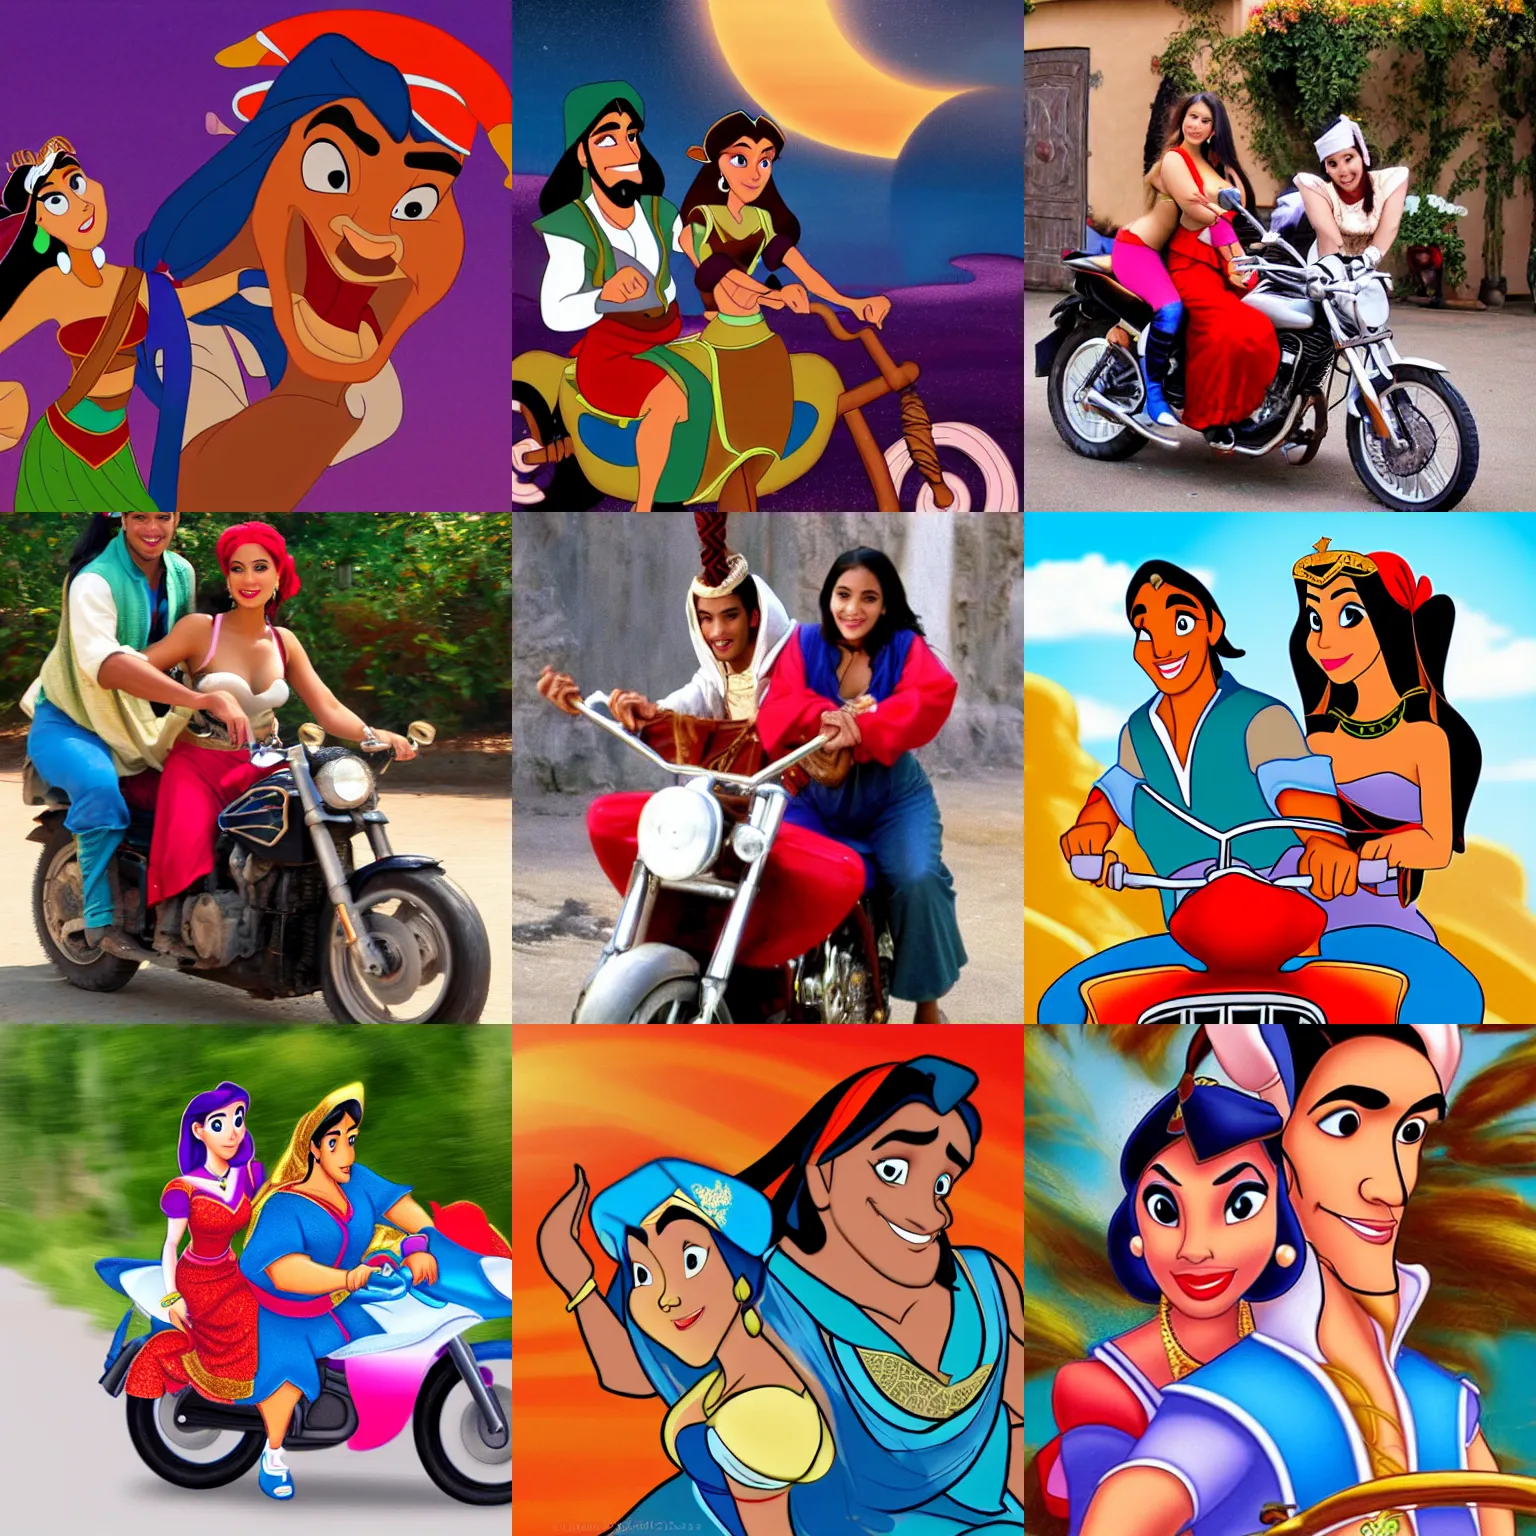 Prompt: Jasmine and Aladdin riding on a motorbike